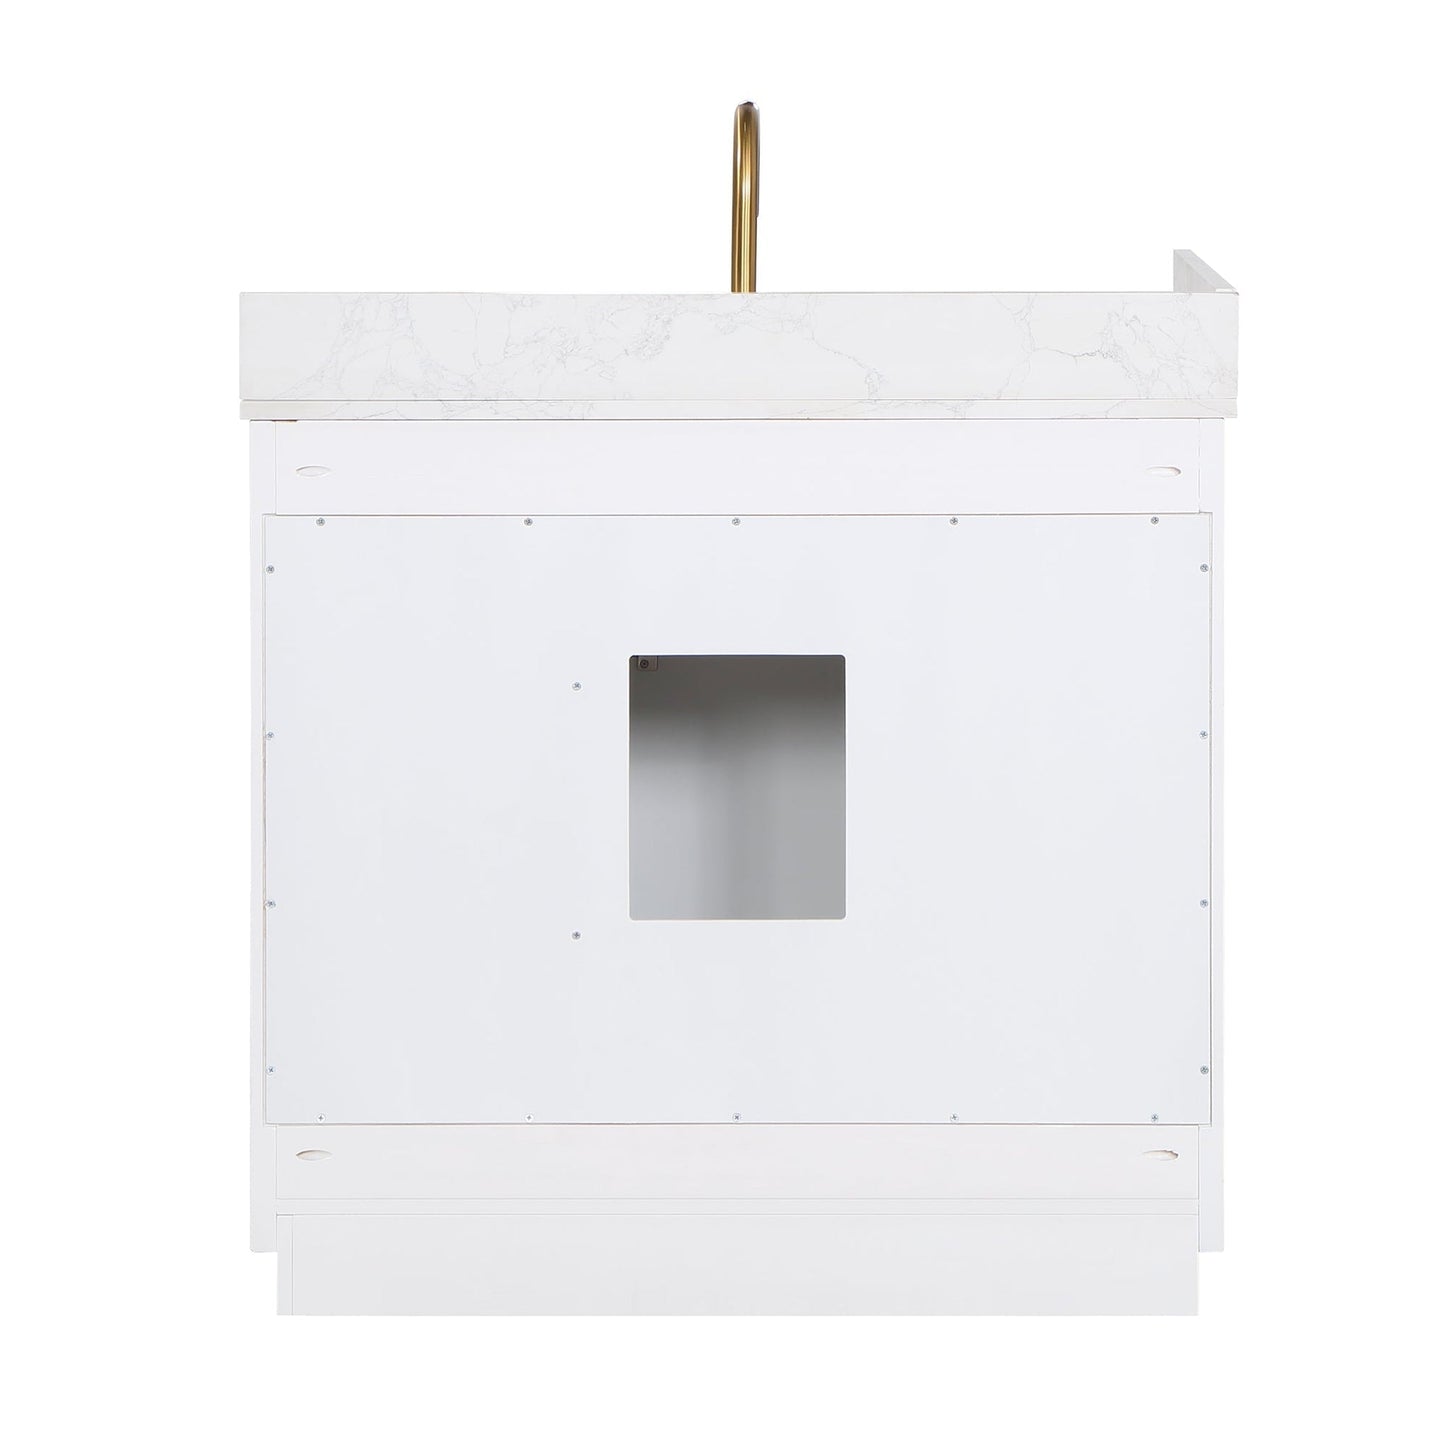 Altair Gavino 36" White Freestanding Single Bathroom Vanity Set With Grain White Composite Stone Top, Single Rectangular Undermount Ceramic Sink, Overflow, Sidesplash, and Backsplash